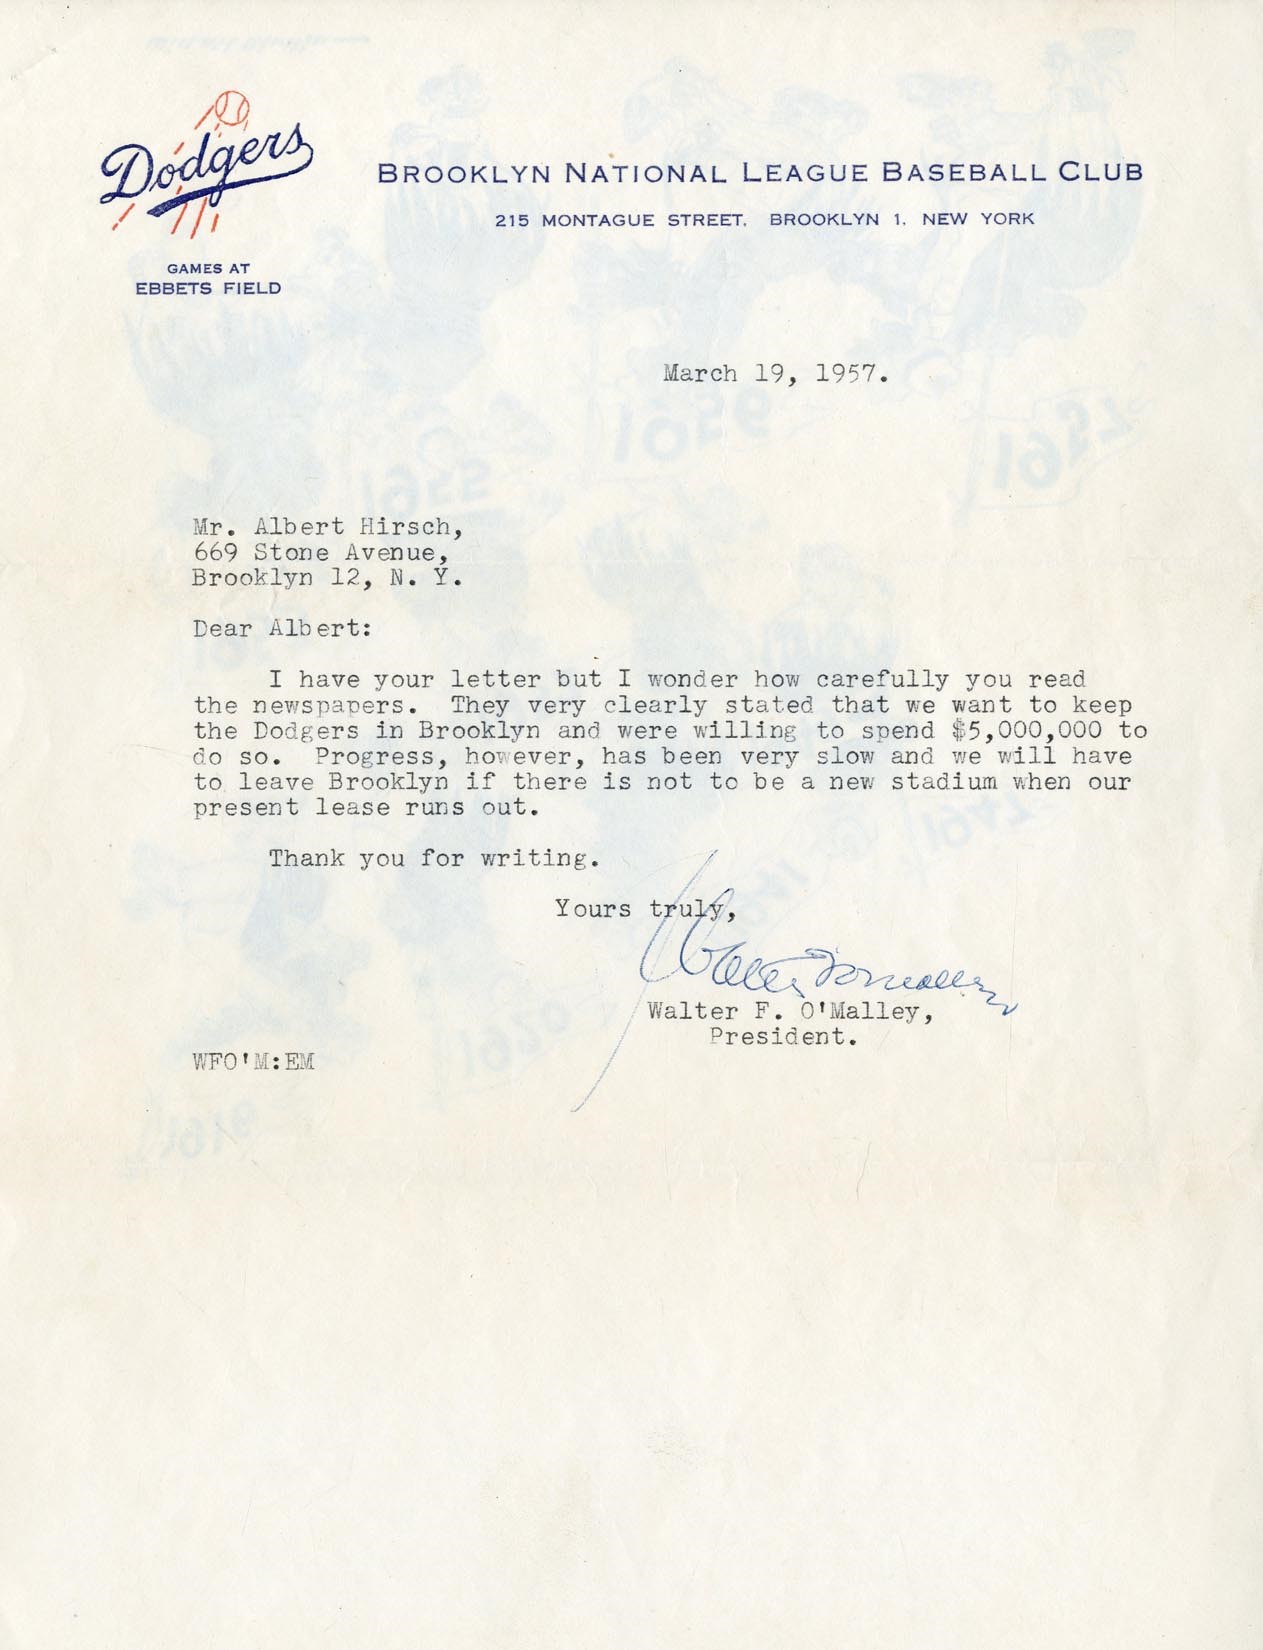 Jackie Robinson & Brooklyn Dodgers - 1957 Walter O'Malley "Keep the Dodgers in Brooklyn" Letter